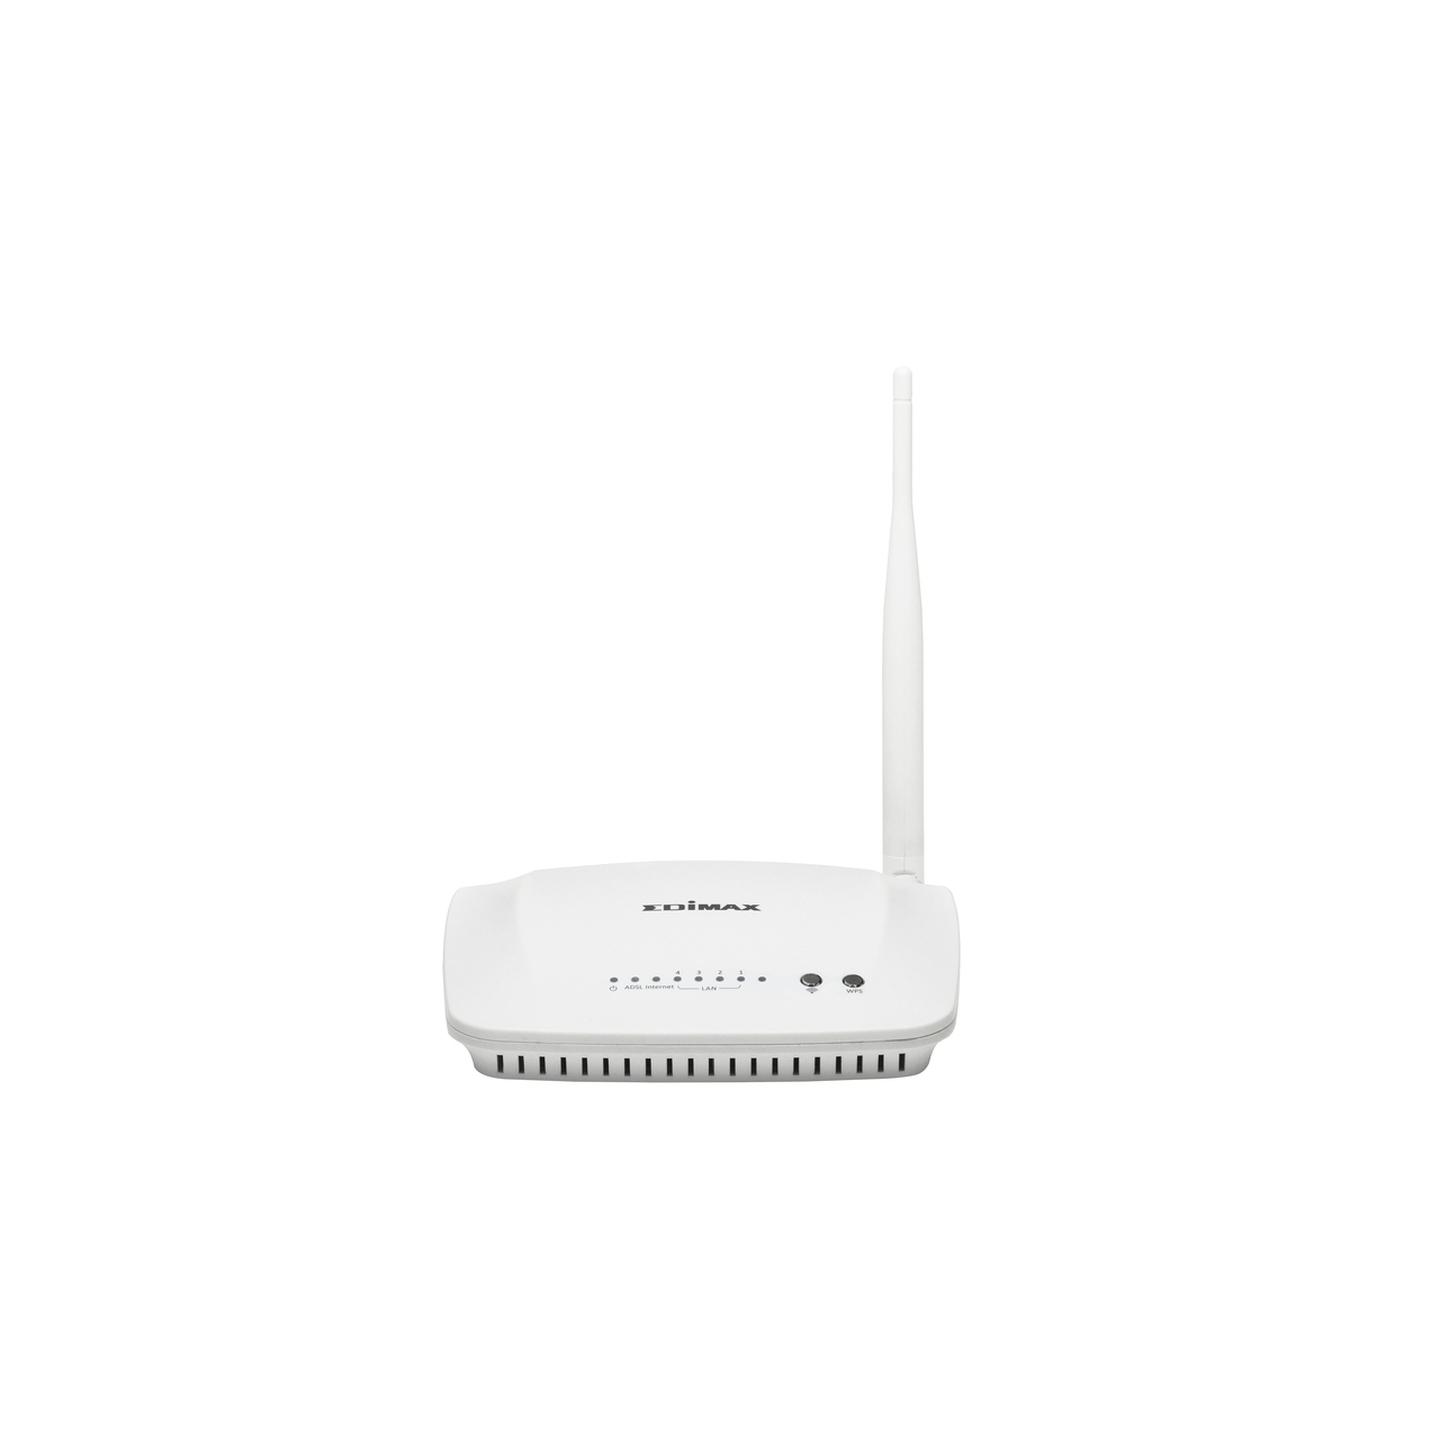 Wireless N150 ADSL2 Modem Router